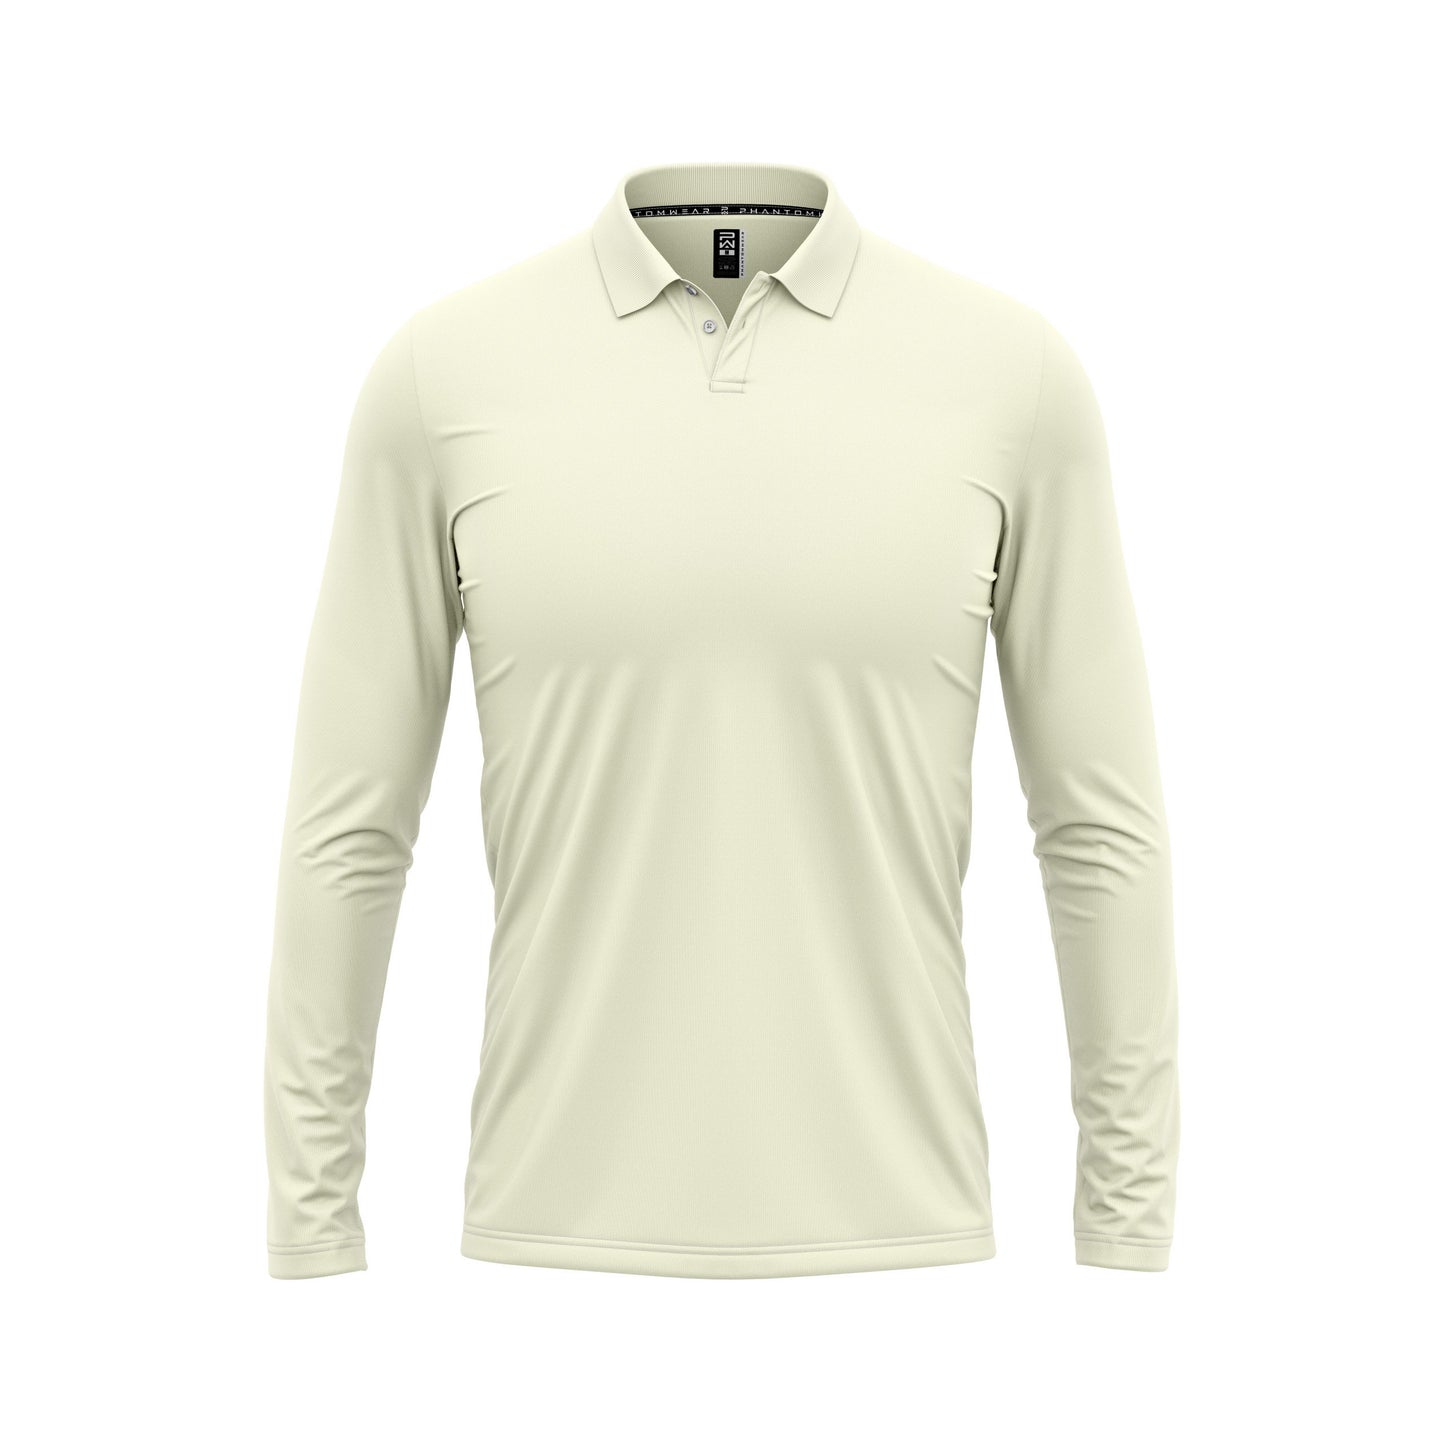 Pro Long Sleeve Match Shirt – Ivory